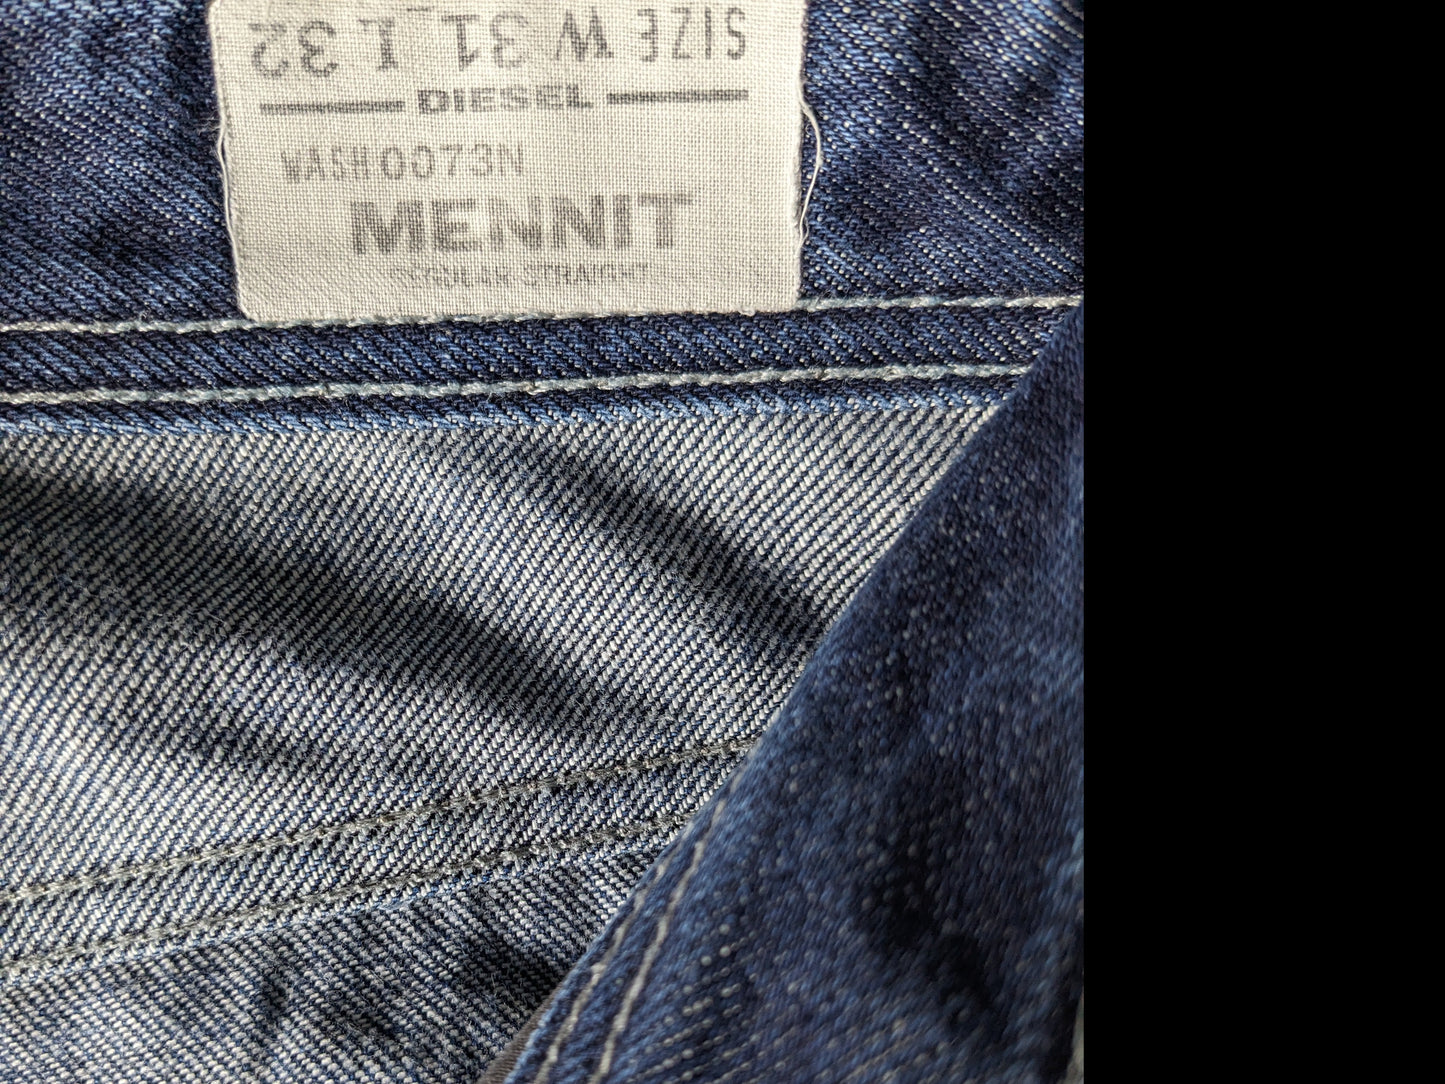 Diesel jeans. Dark blue colored. Size W31 - L32. Type "Mennit".